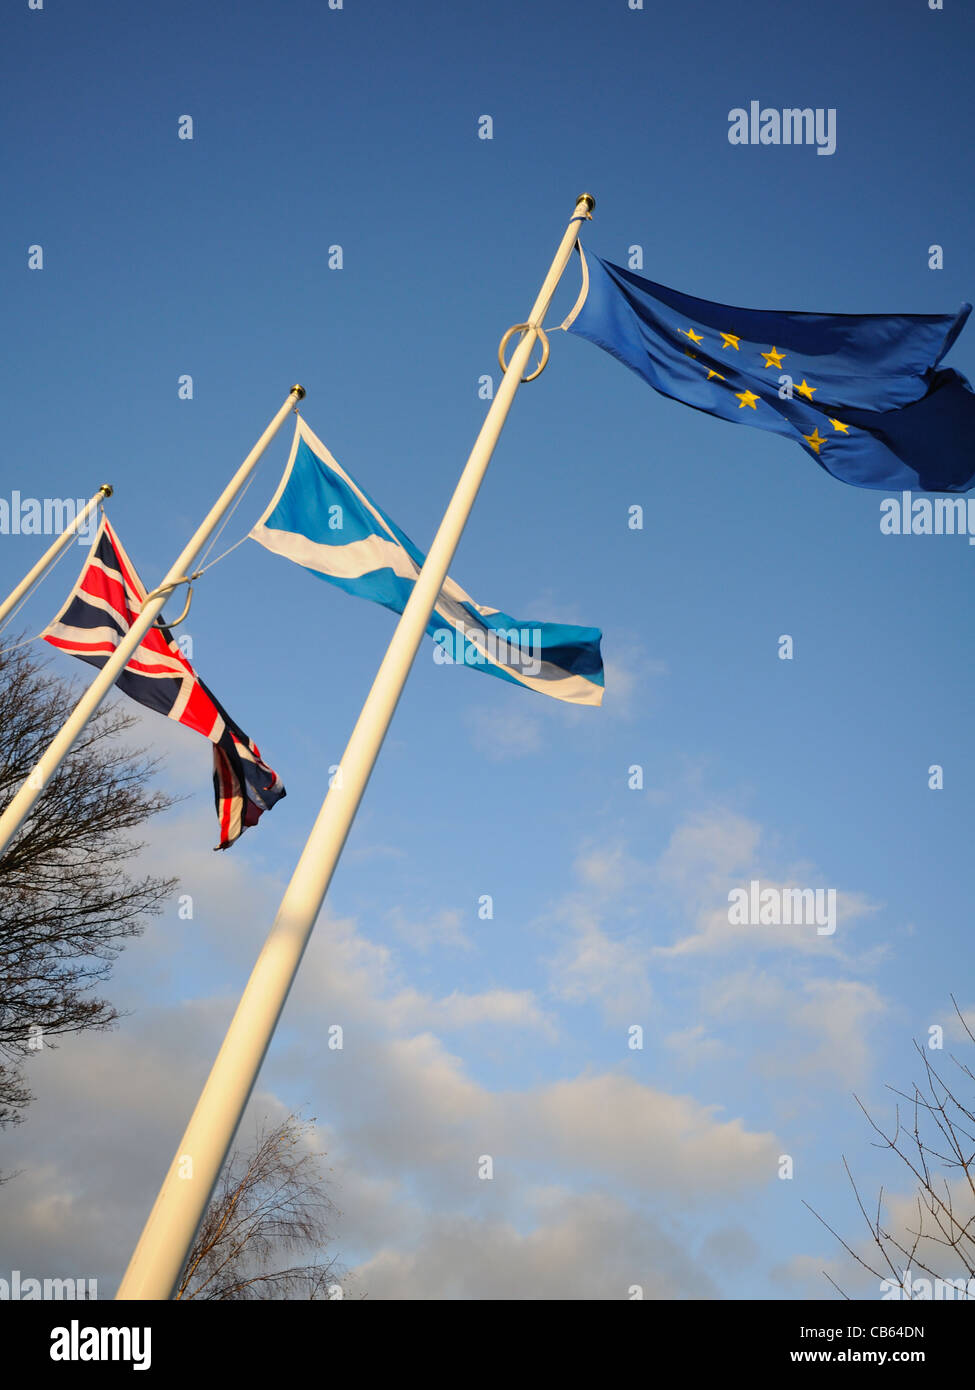 Three flags on flag poles. Stock Photo